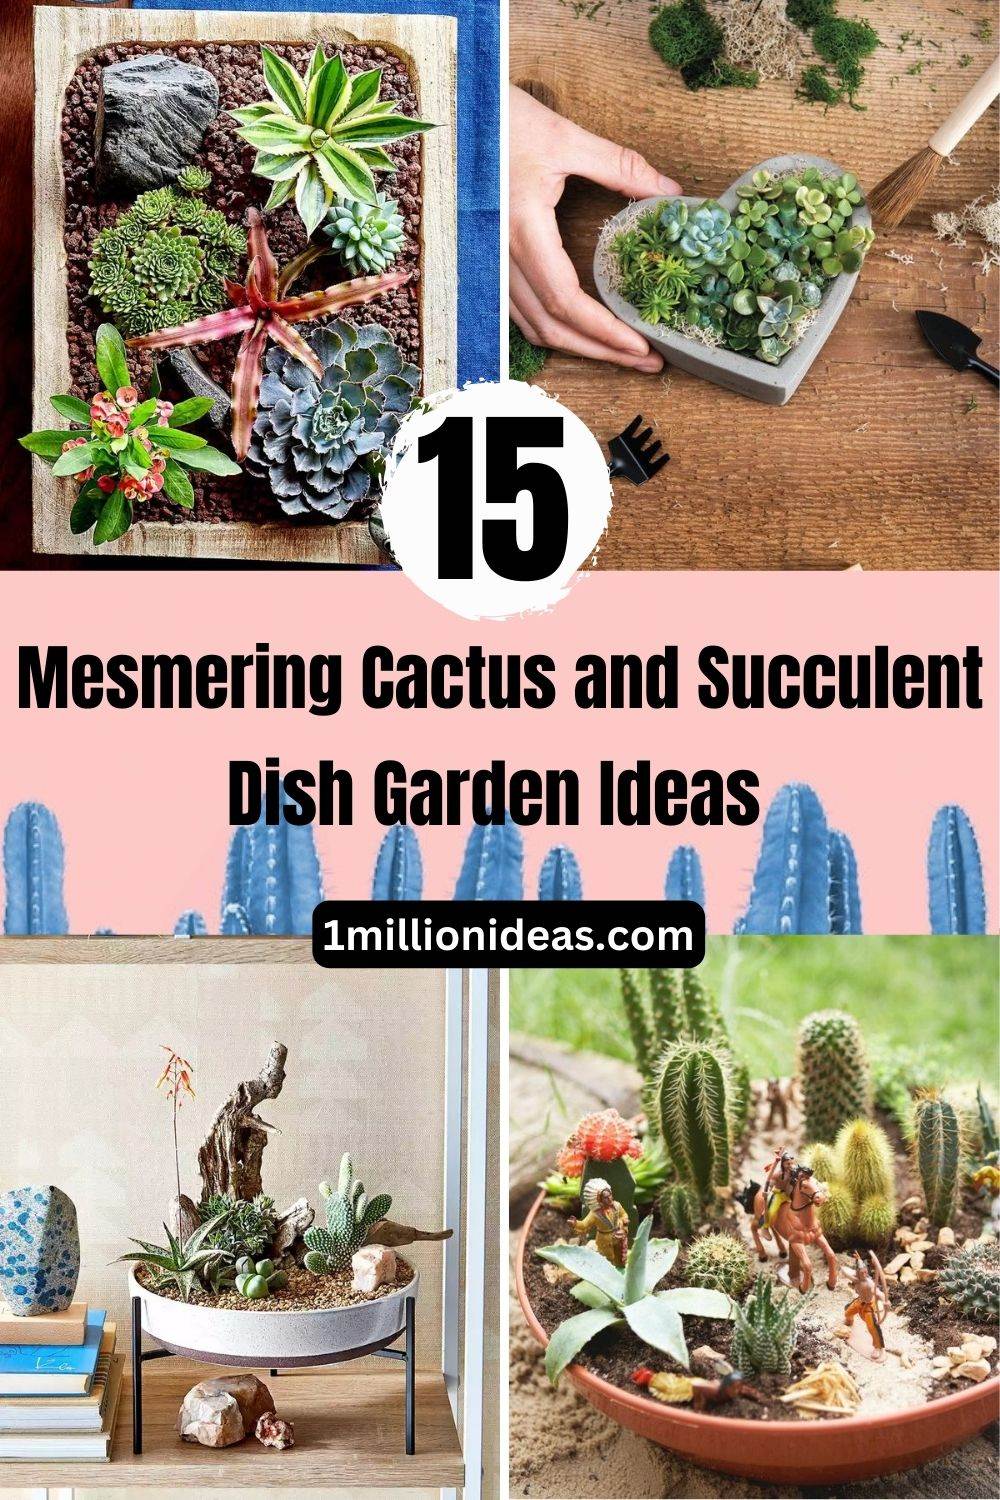 15 Mesmerizing Cactus and Succulent Dish Garden Ideas - 101